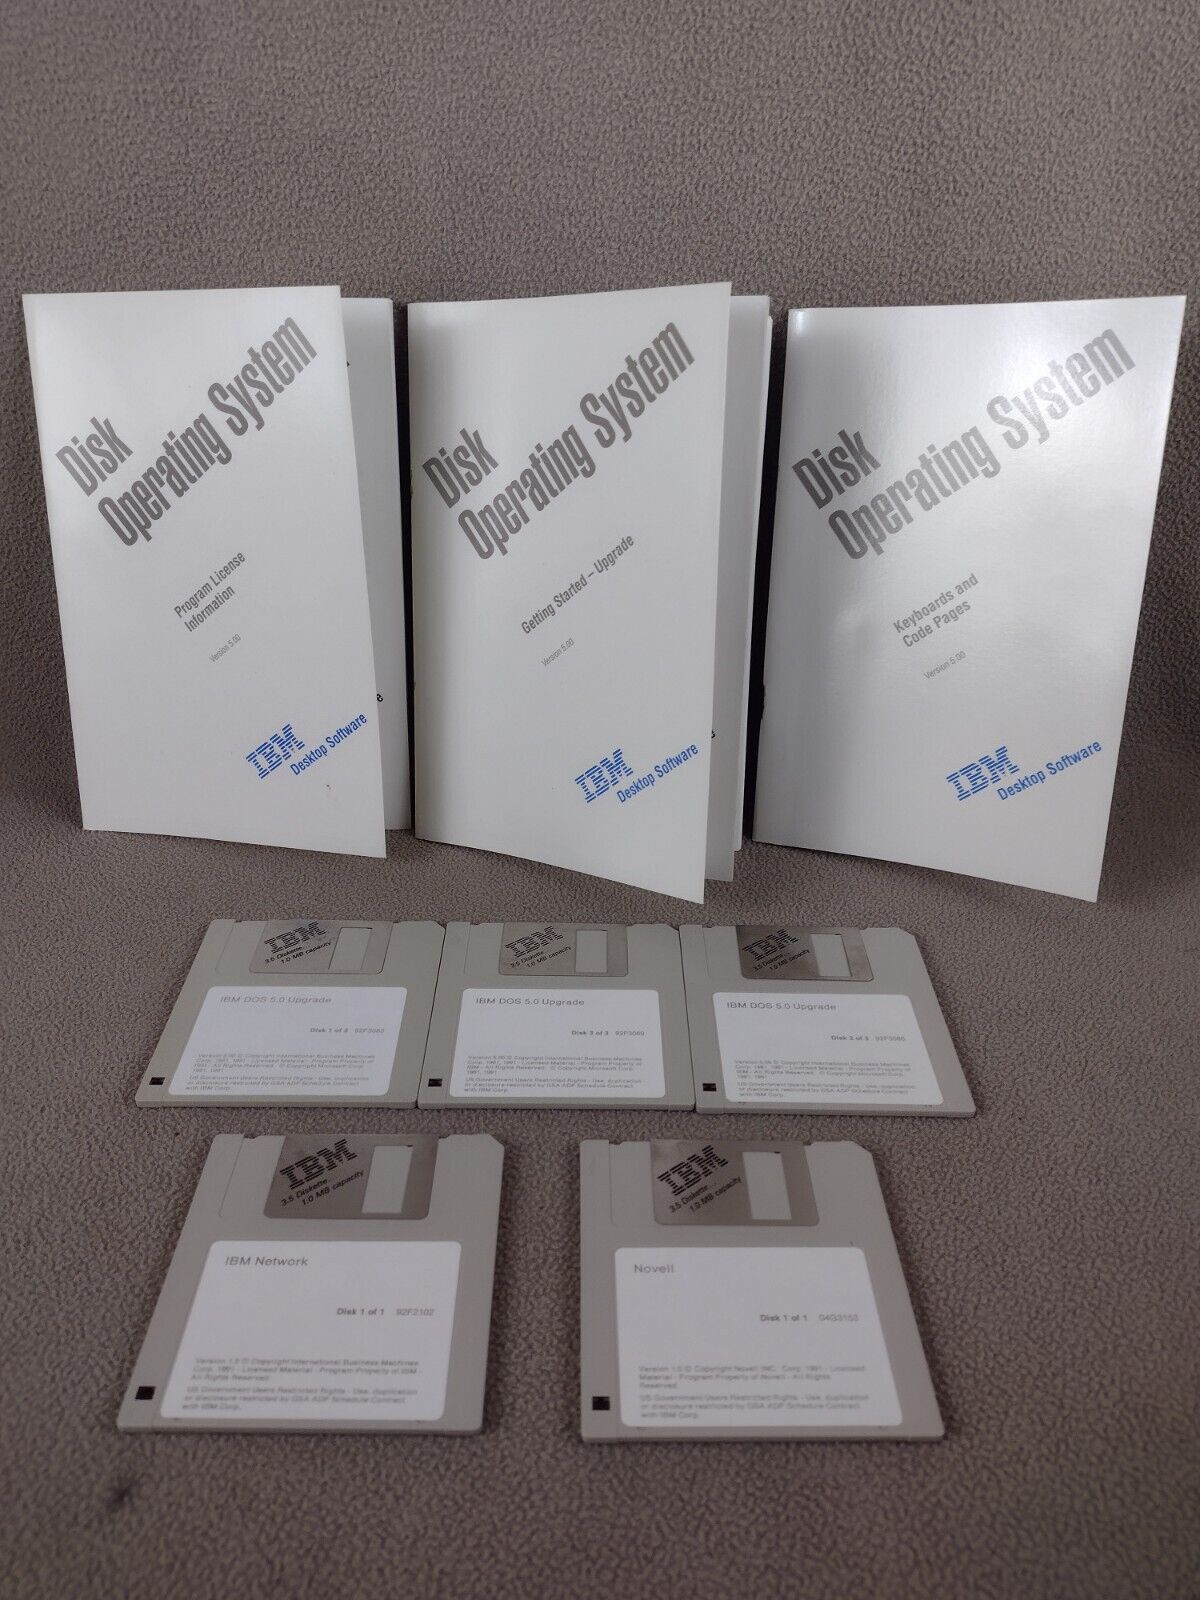 IBM DOS 5.0 Upgrade 3.5 Disks 1-3 with Novell and IBM Network Disks 1991